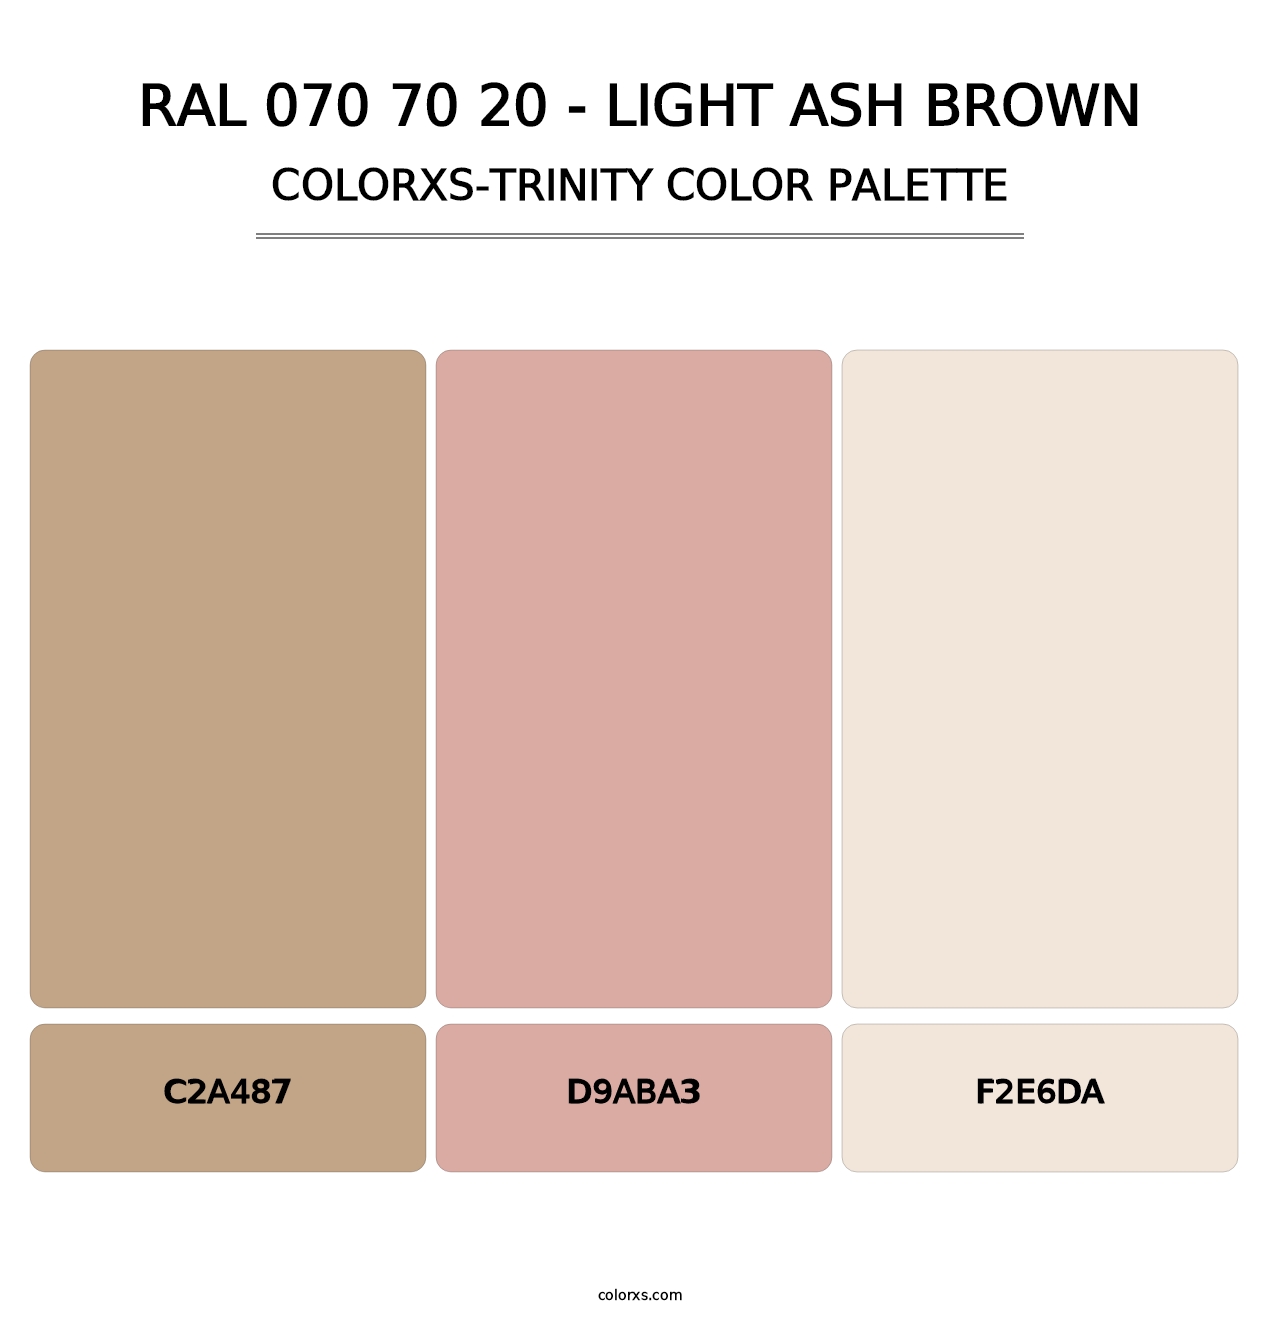 RAL 070 70 20 - Light Ash Brown - Colorxs Trinity Palette